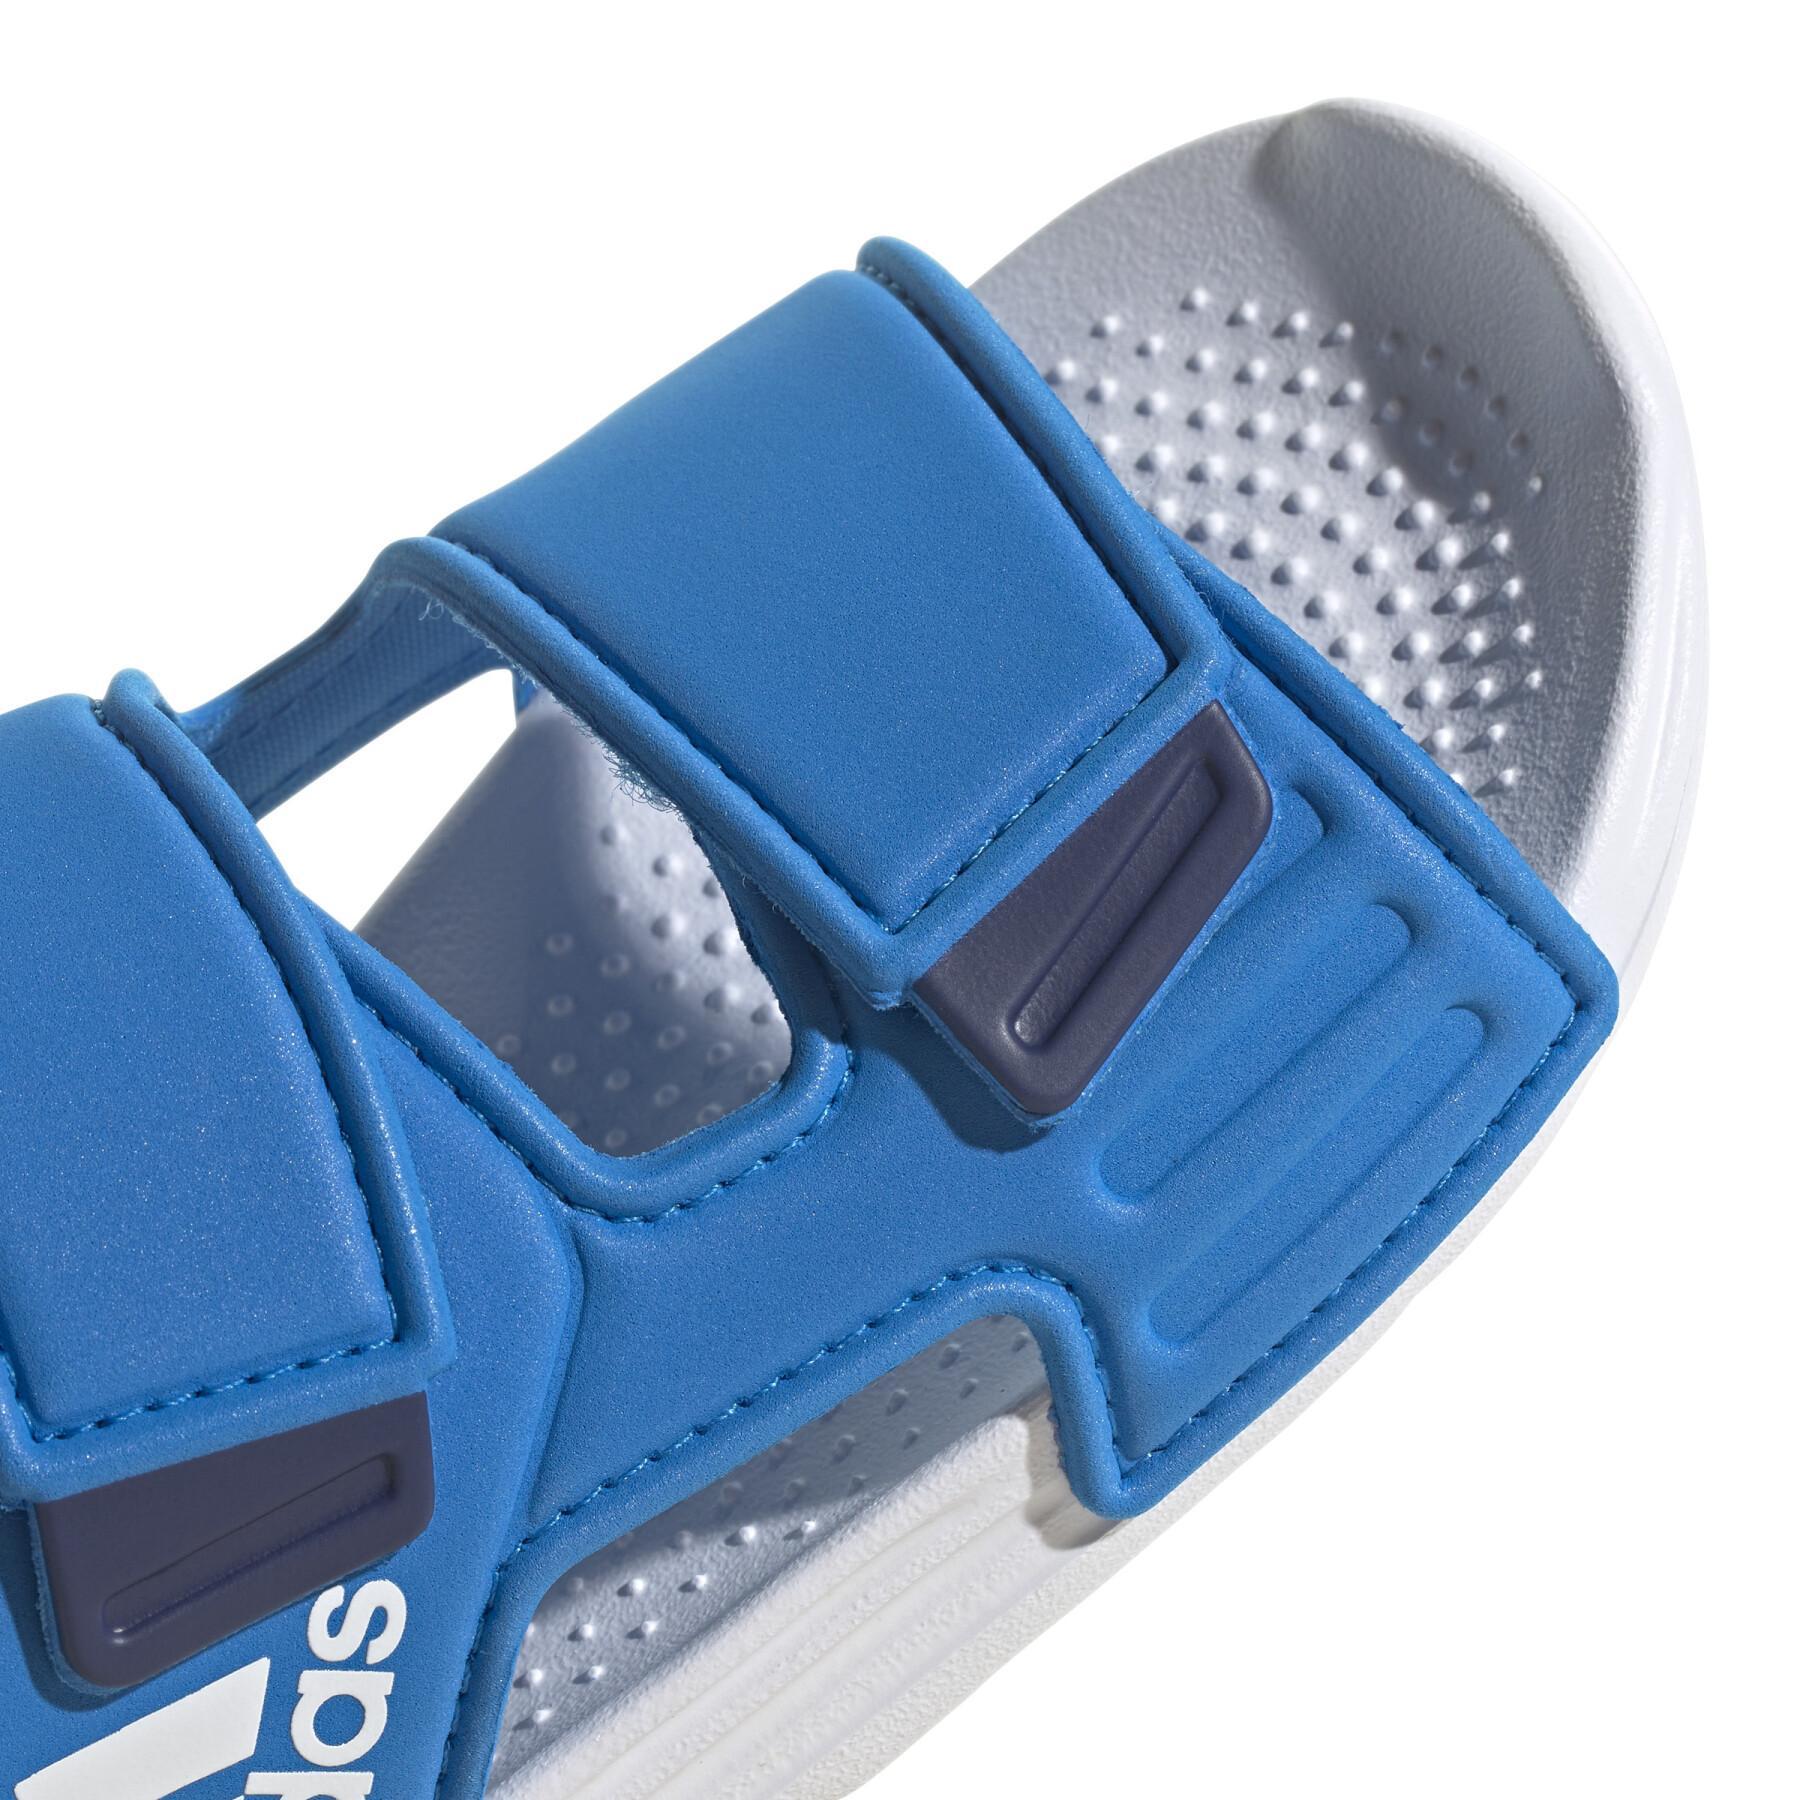 Children's sandals adidas Altaswim